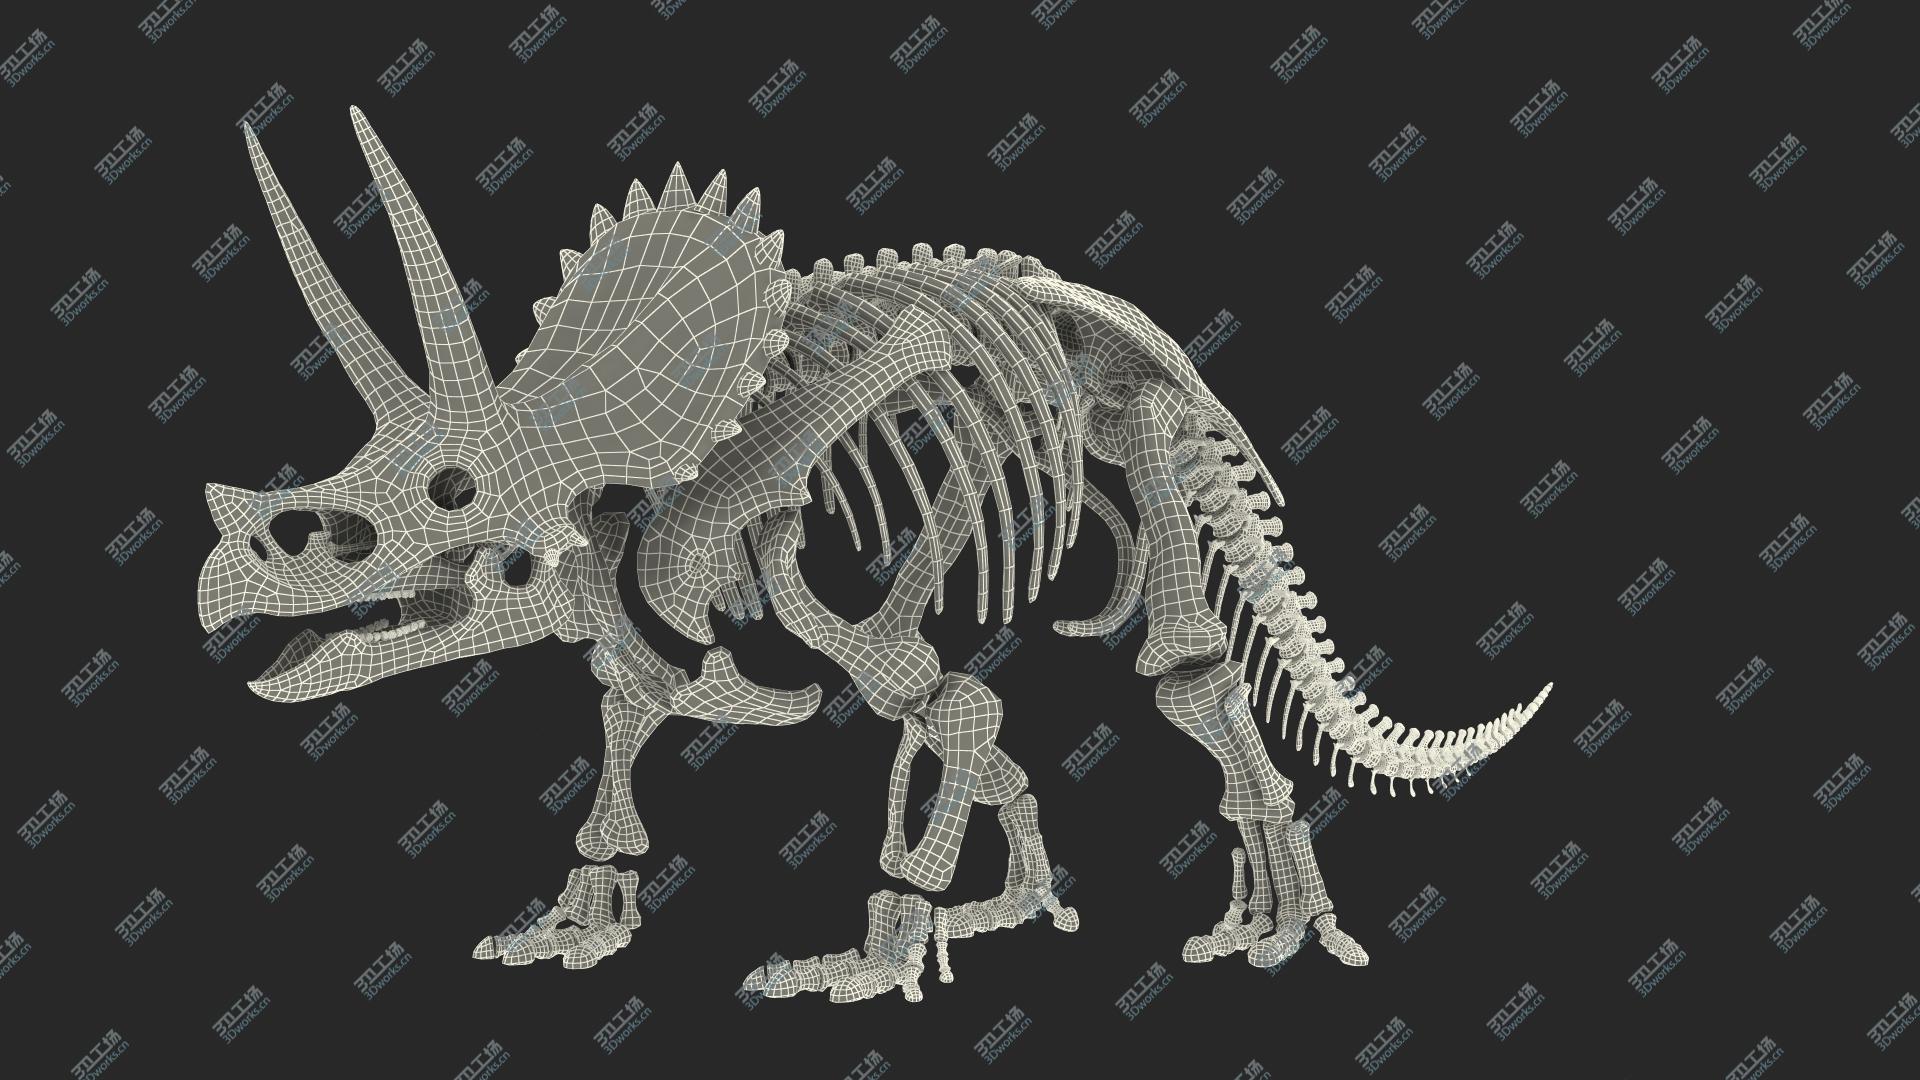 images/goods_img/202104093/3D Triceratops Skeleton Fossil Rigged/5.jpg